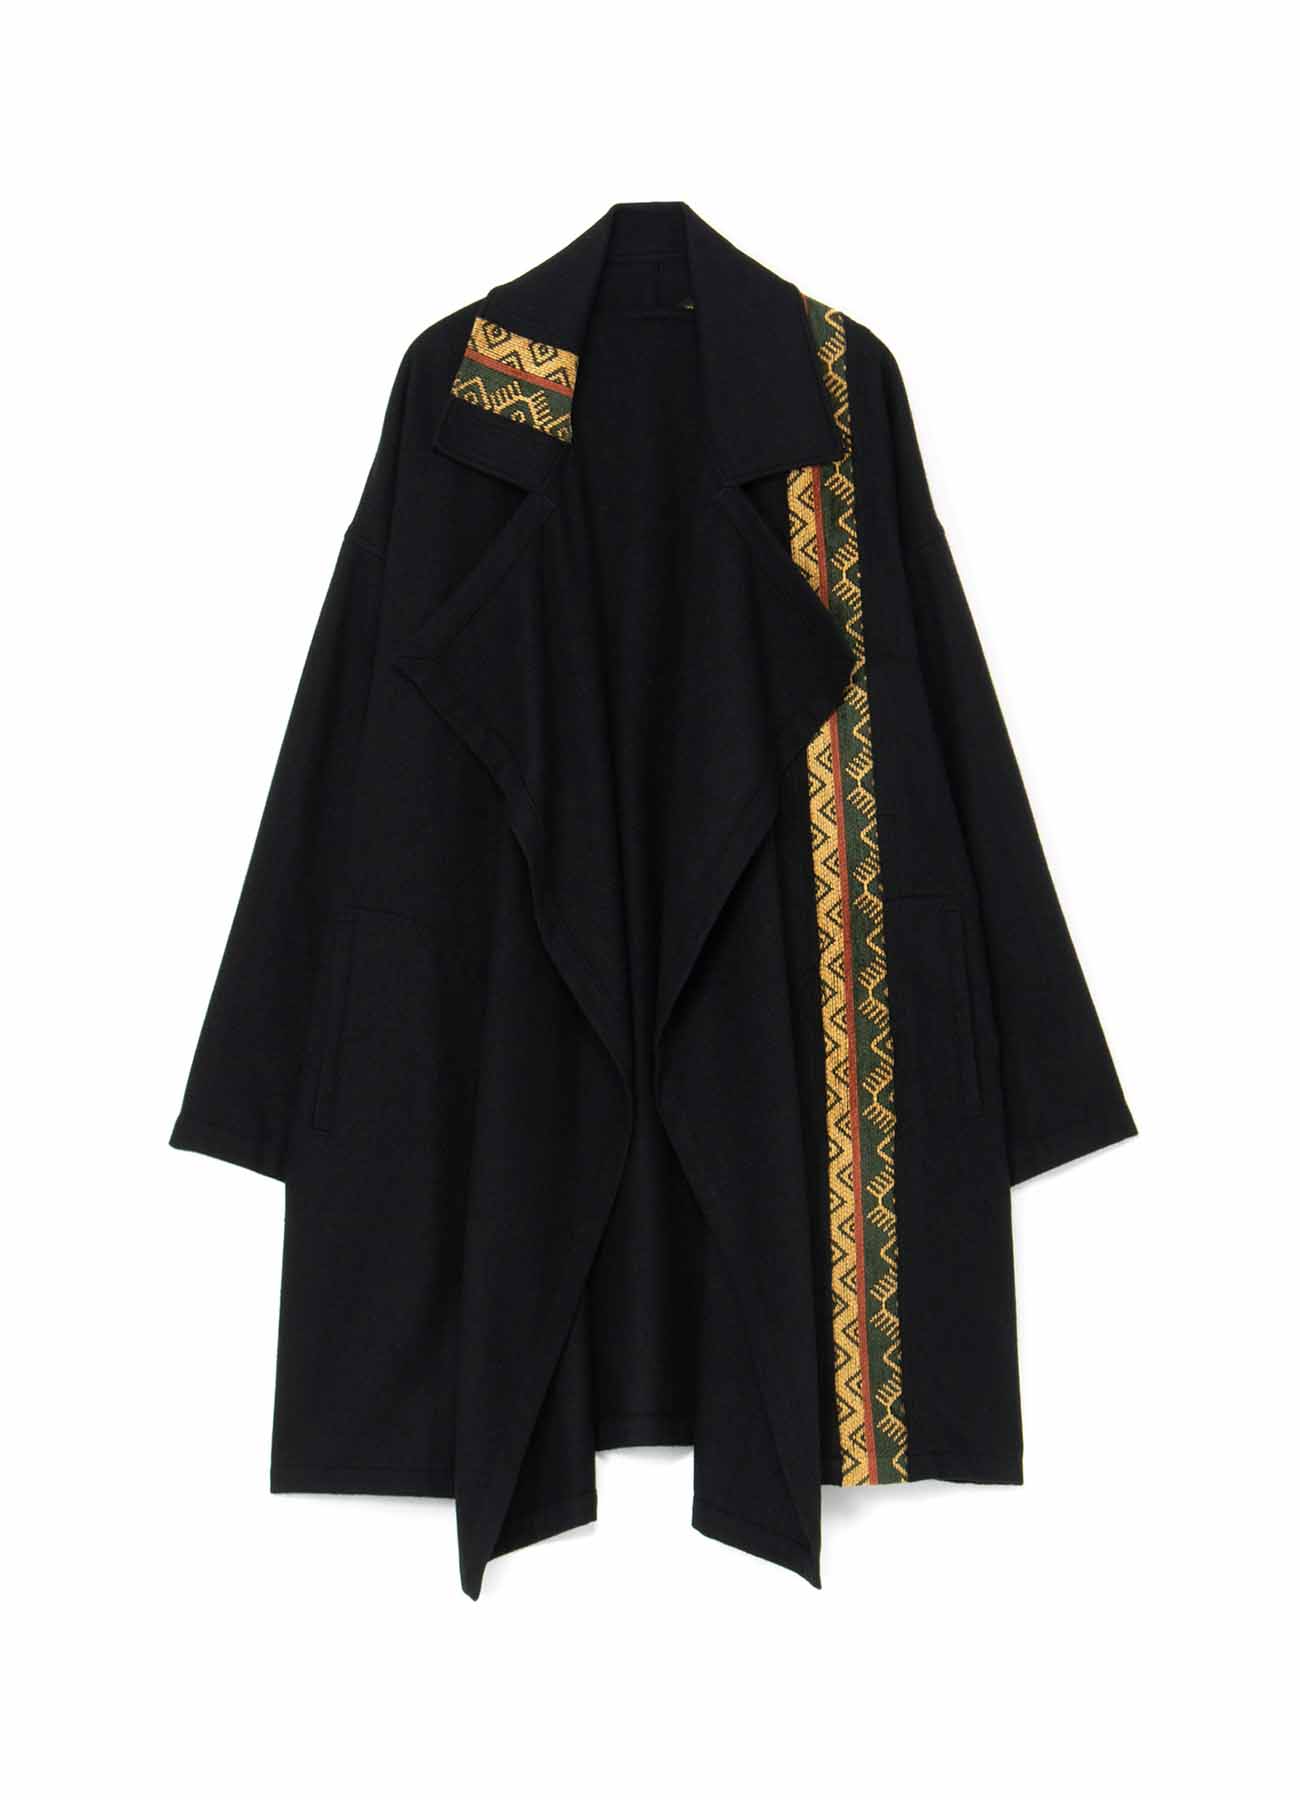 Flannel+Ecuadorian Woven Braid Switch Coat